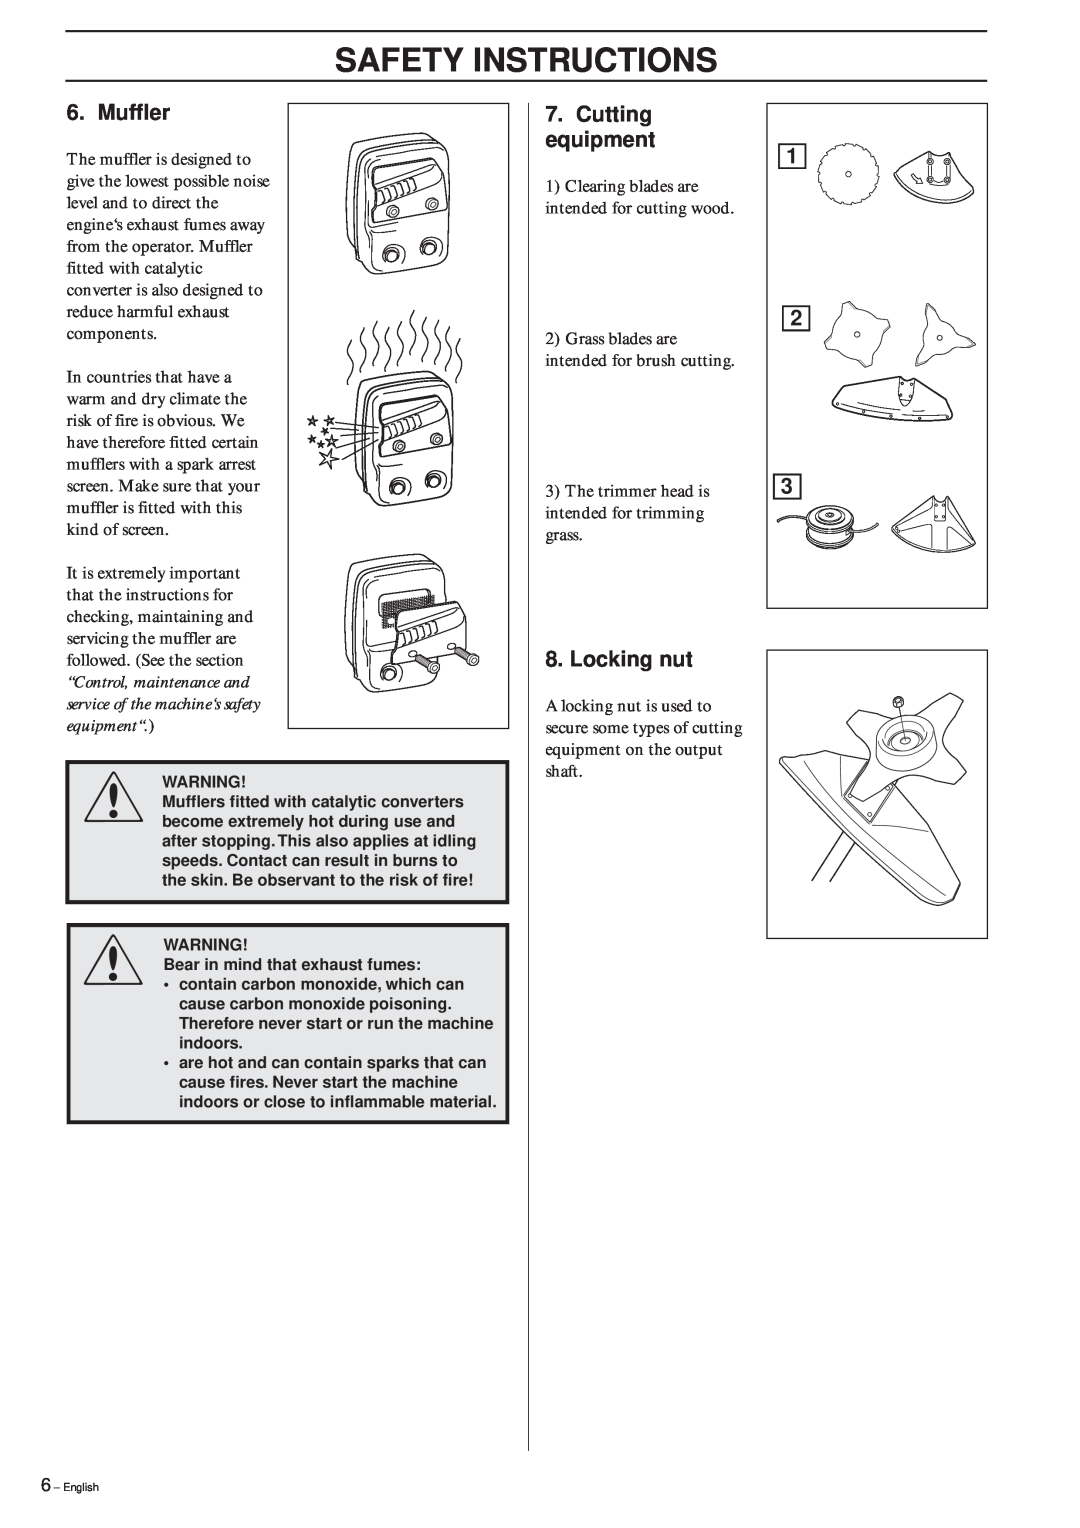 Husqvarna 322R manual Safety Instructions, Muffler, Cutting equipment, Locking nut 